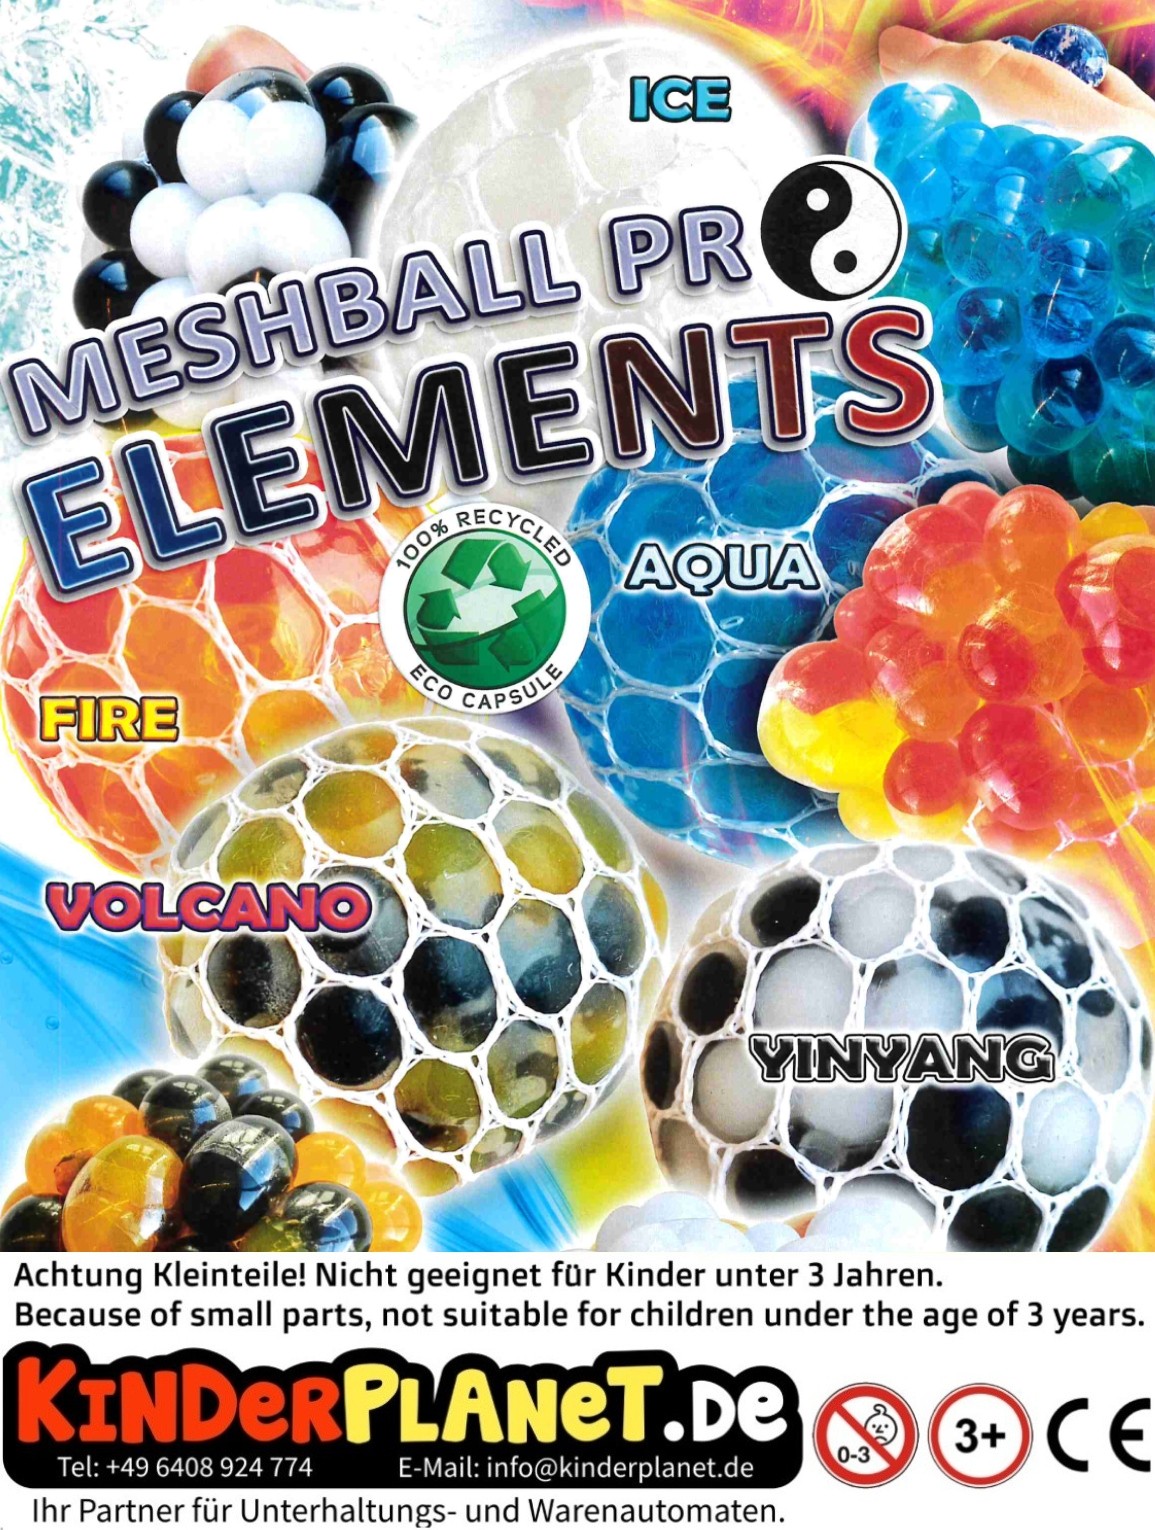 Mesh Balls Pro Elements in 55mm Kapsel